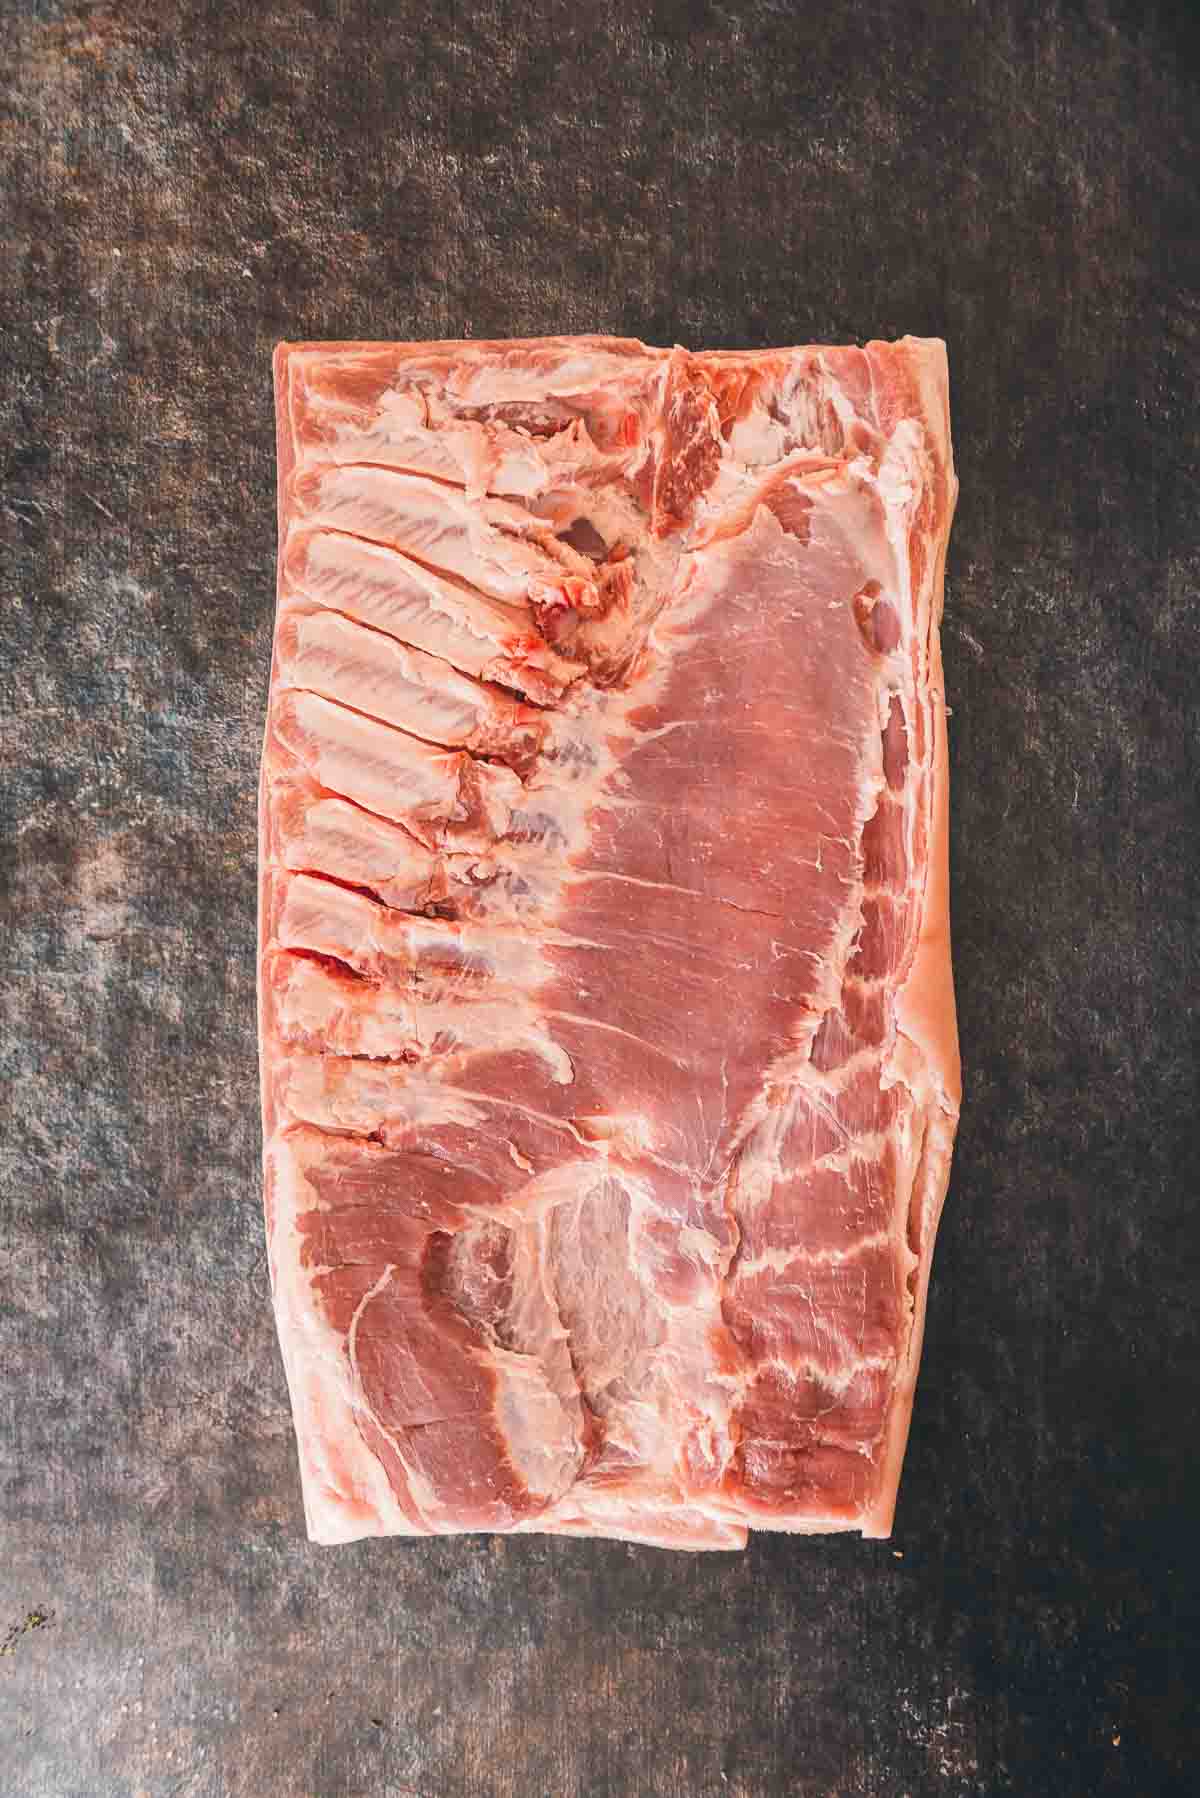 Pork belly slab. 